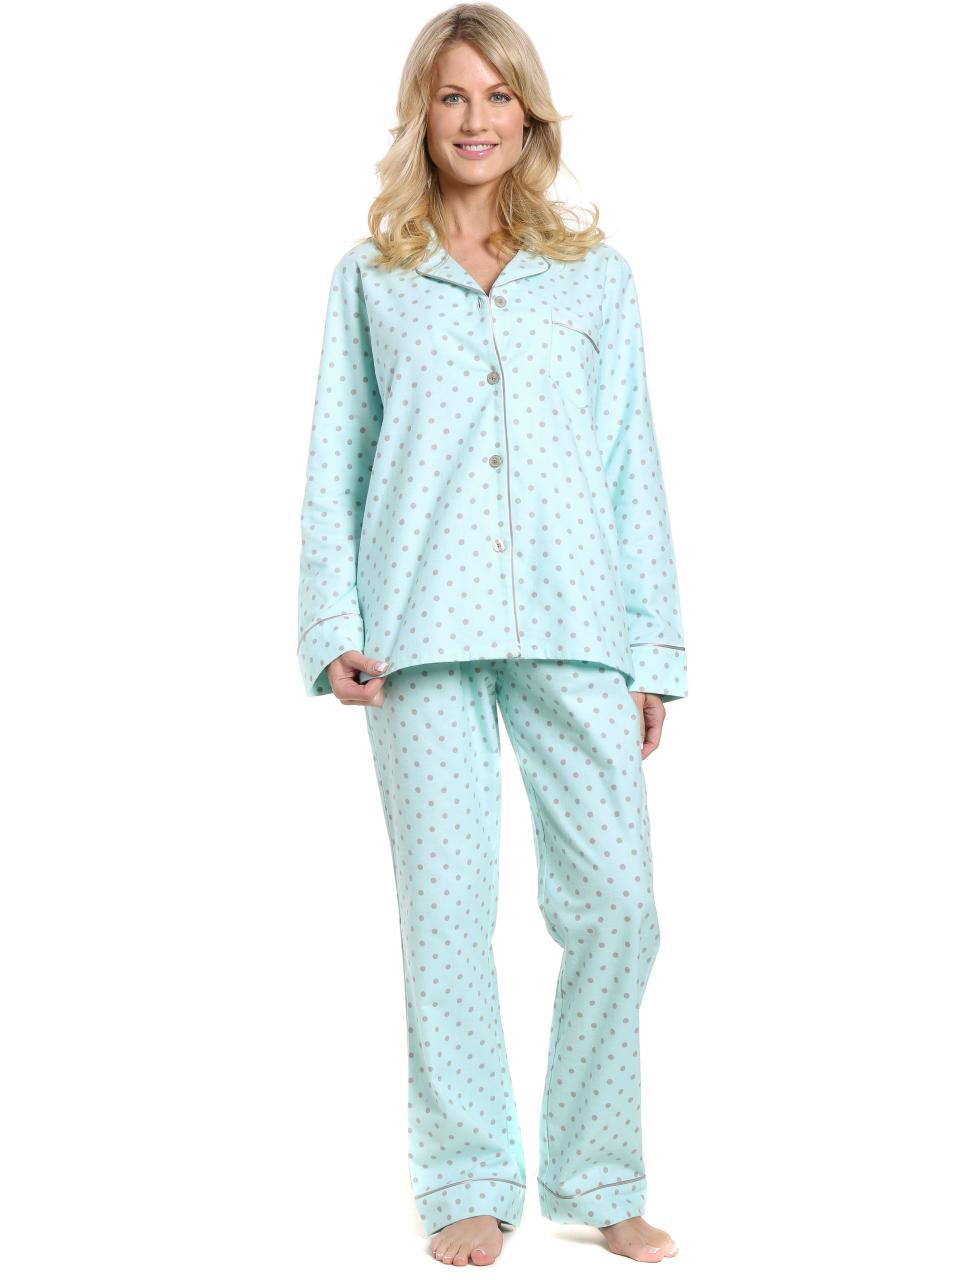 10) Premium 100 percent Cotton Flannel Pajama Sleepwear Set